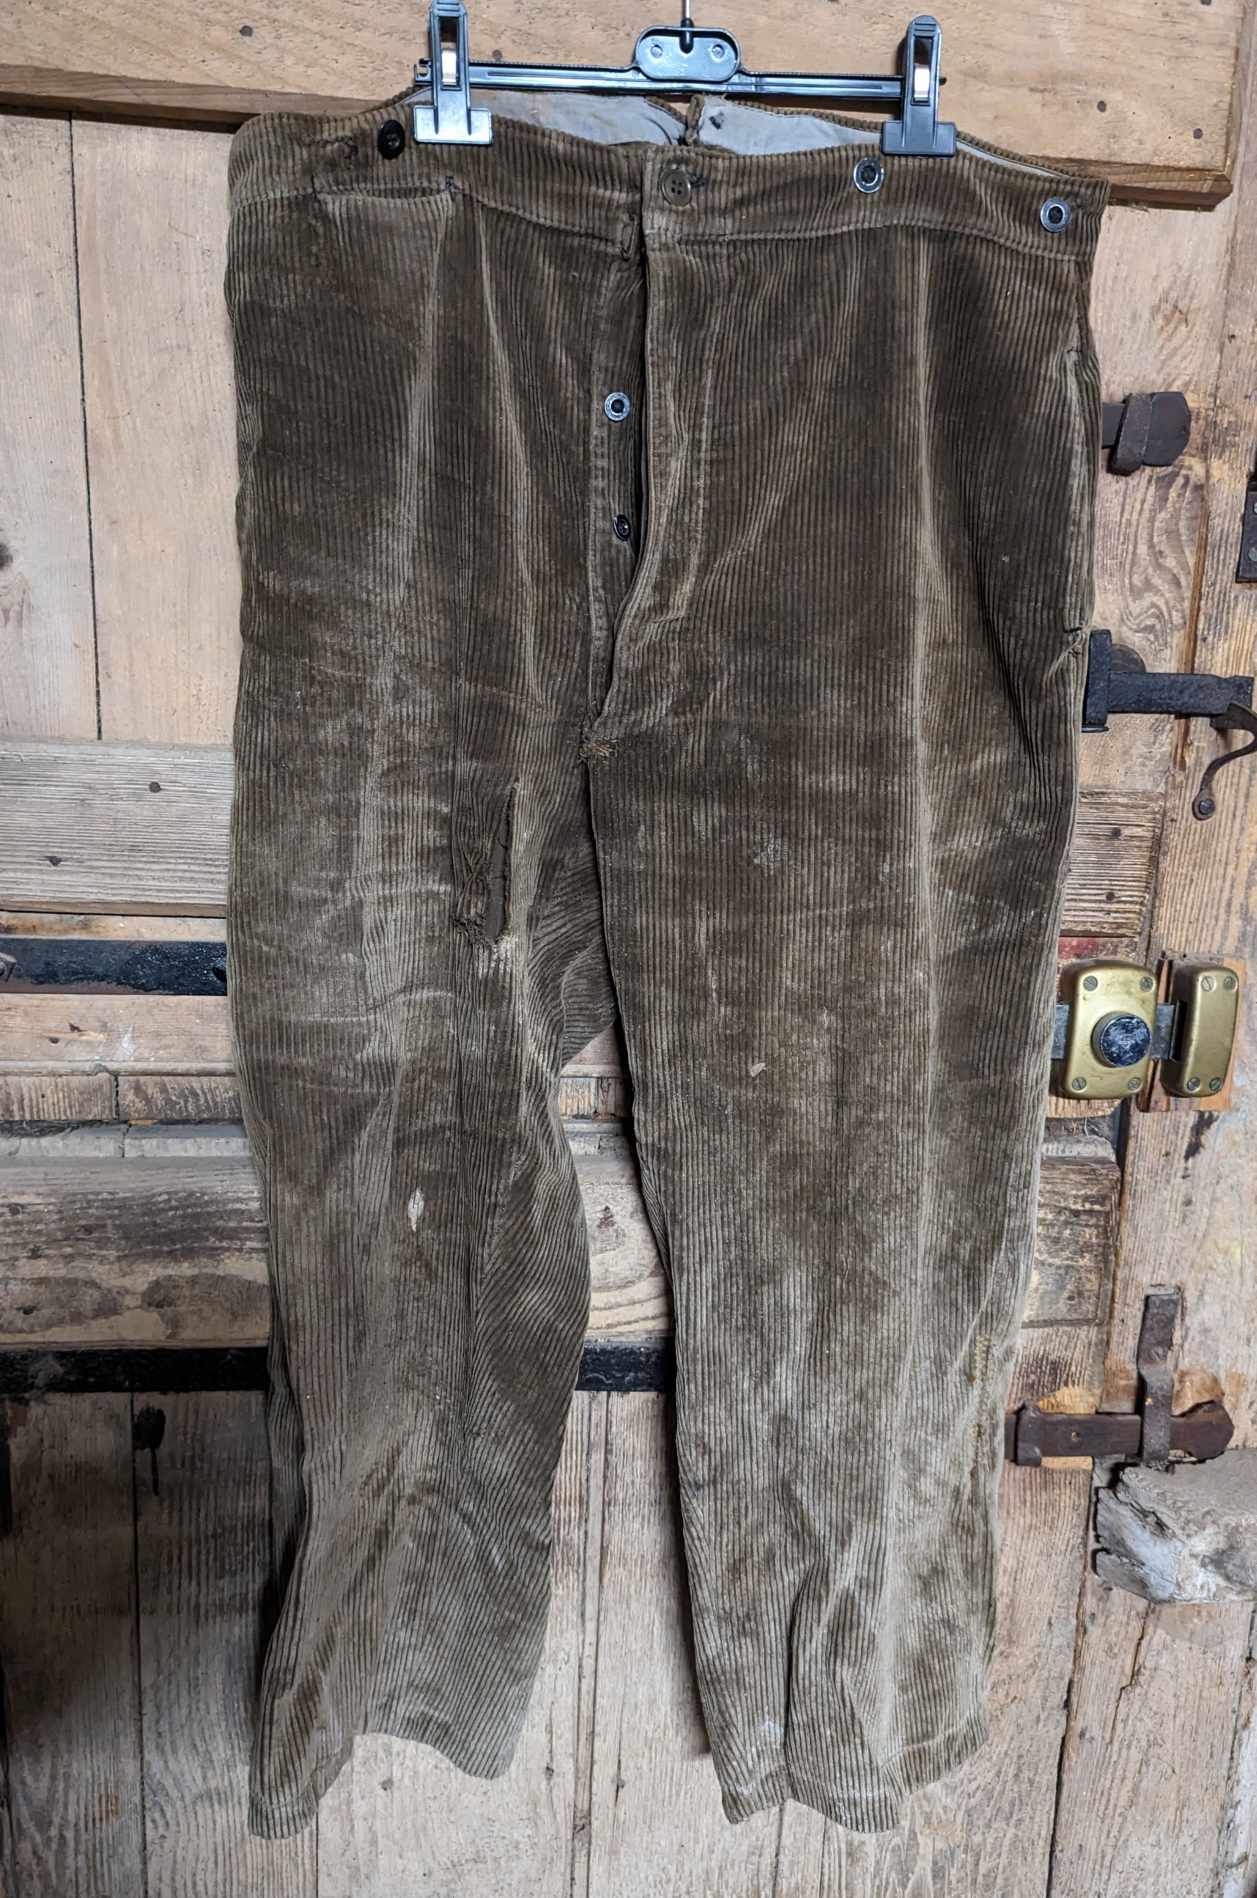 militaria : Pantalon velours côtelé brun type ersatz 1915 / ww1 Brown corduroy pants